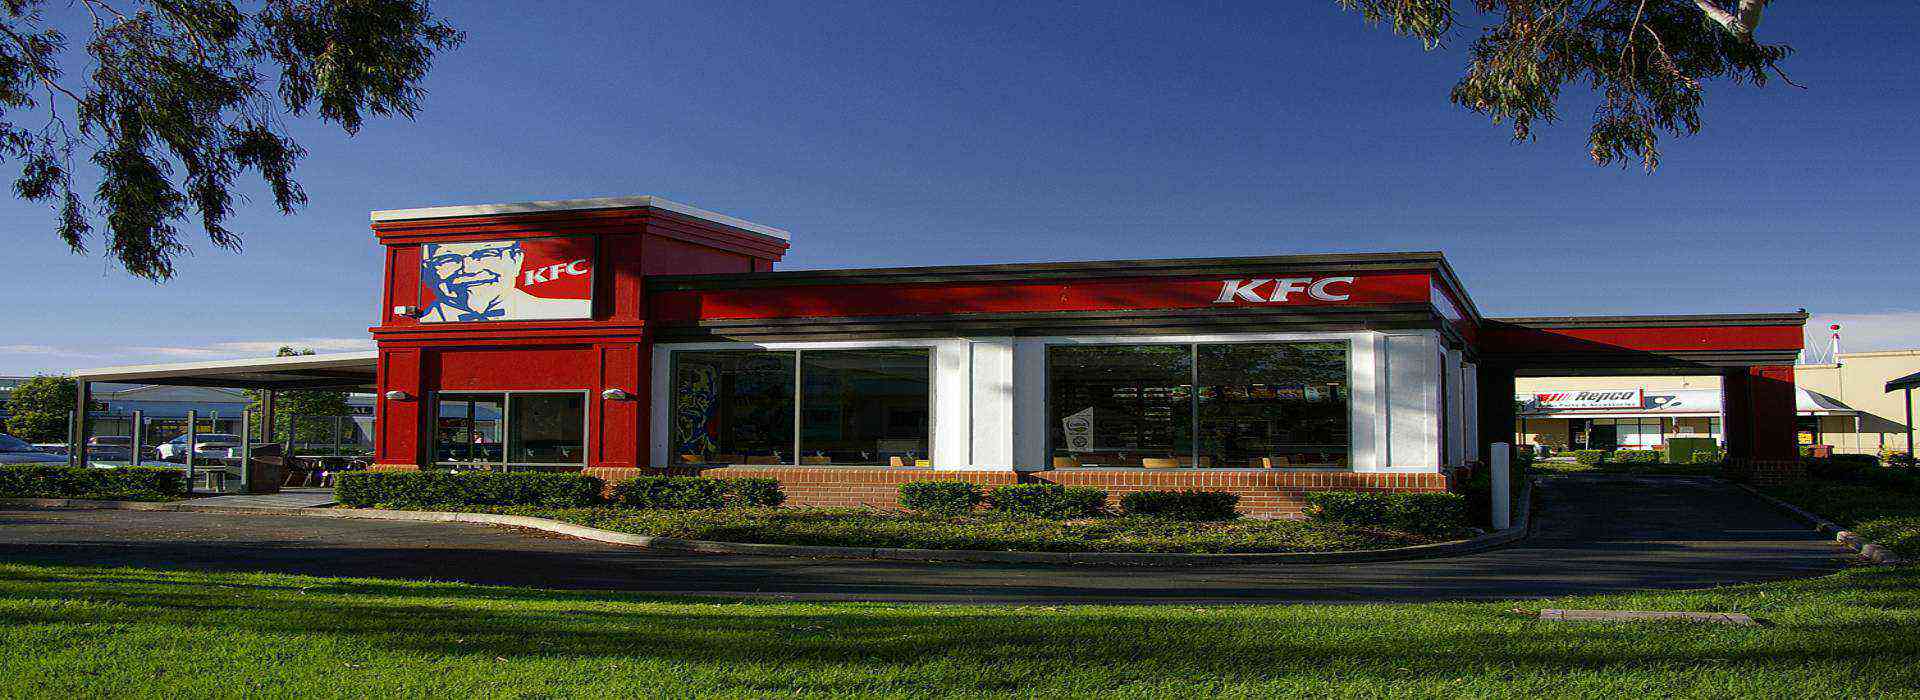 KFC Canada Customer Service Number, Head Office Address |  CustomerServiceDirectory